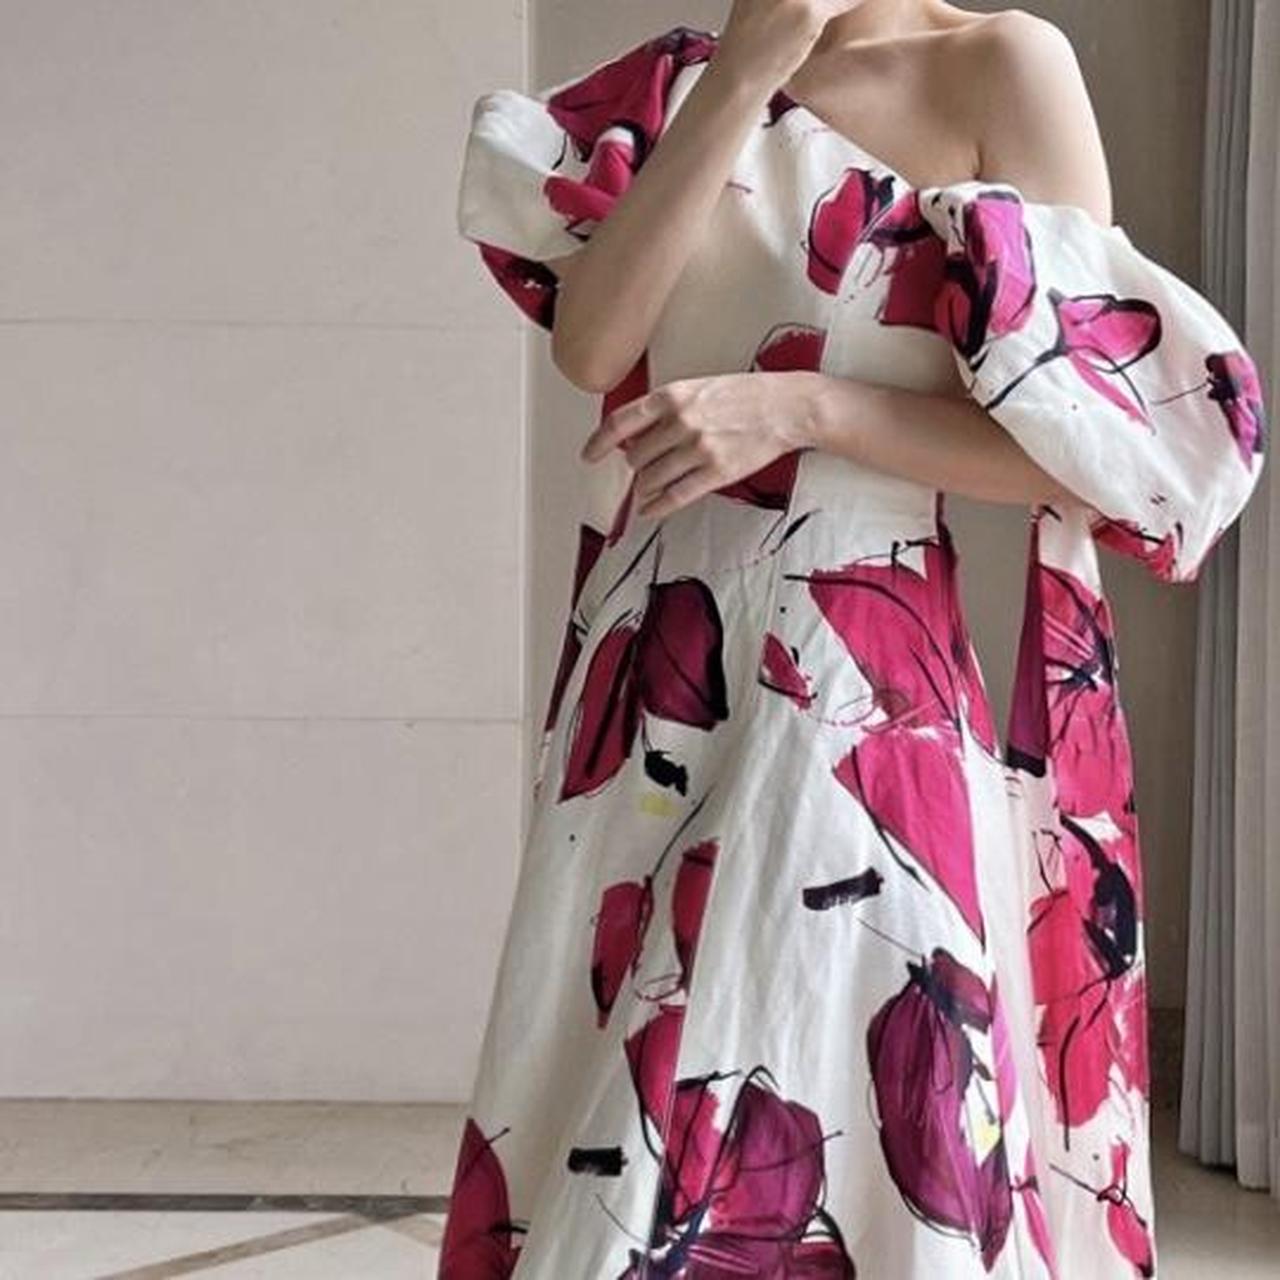 Arista Tulip Sleeve Midi Dress